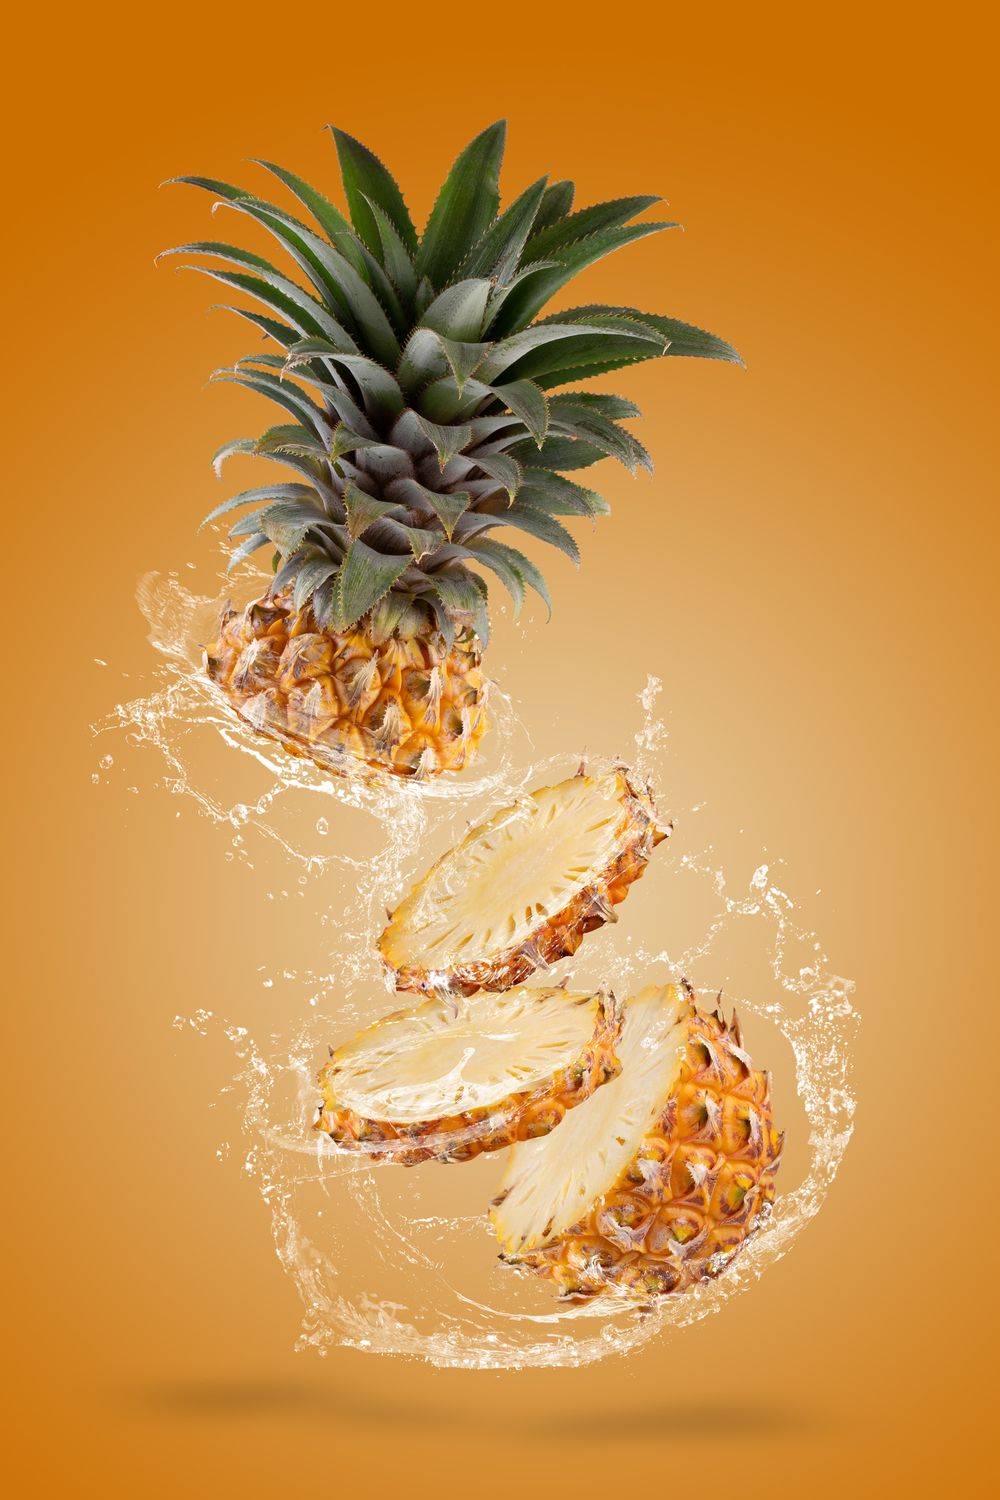 Pineapple Has Many Healing Properties